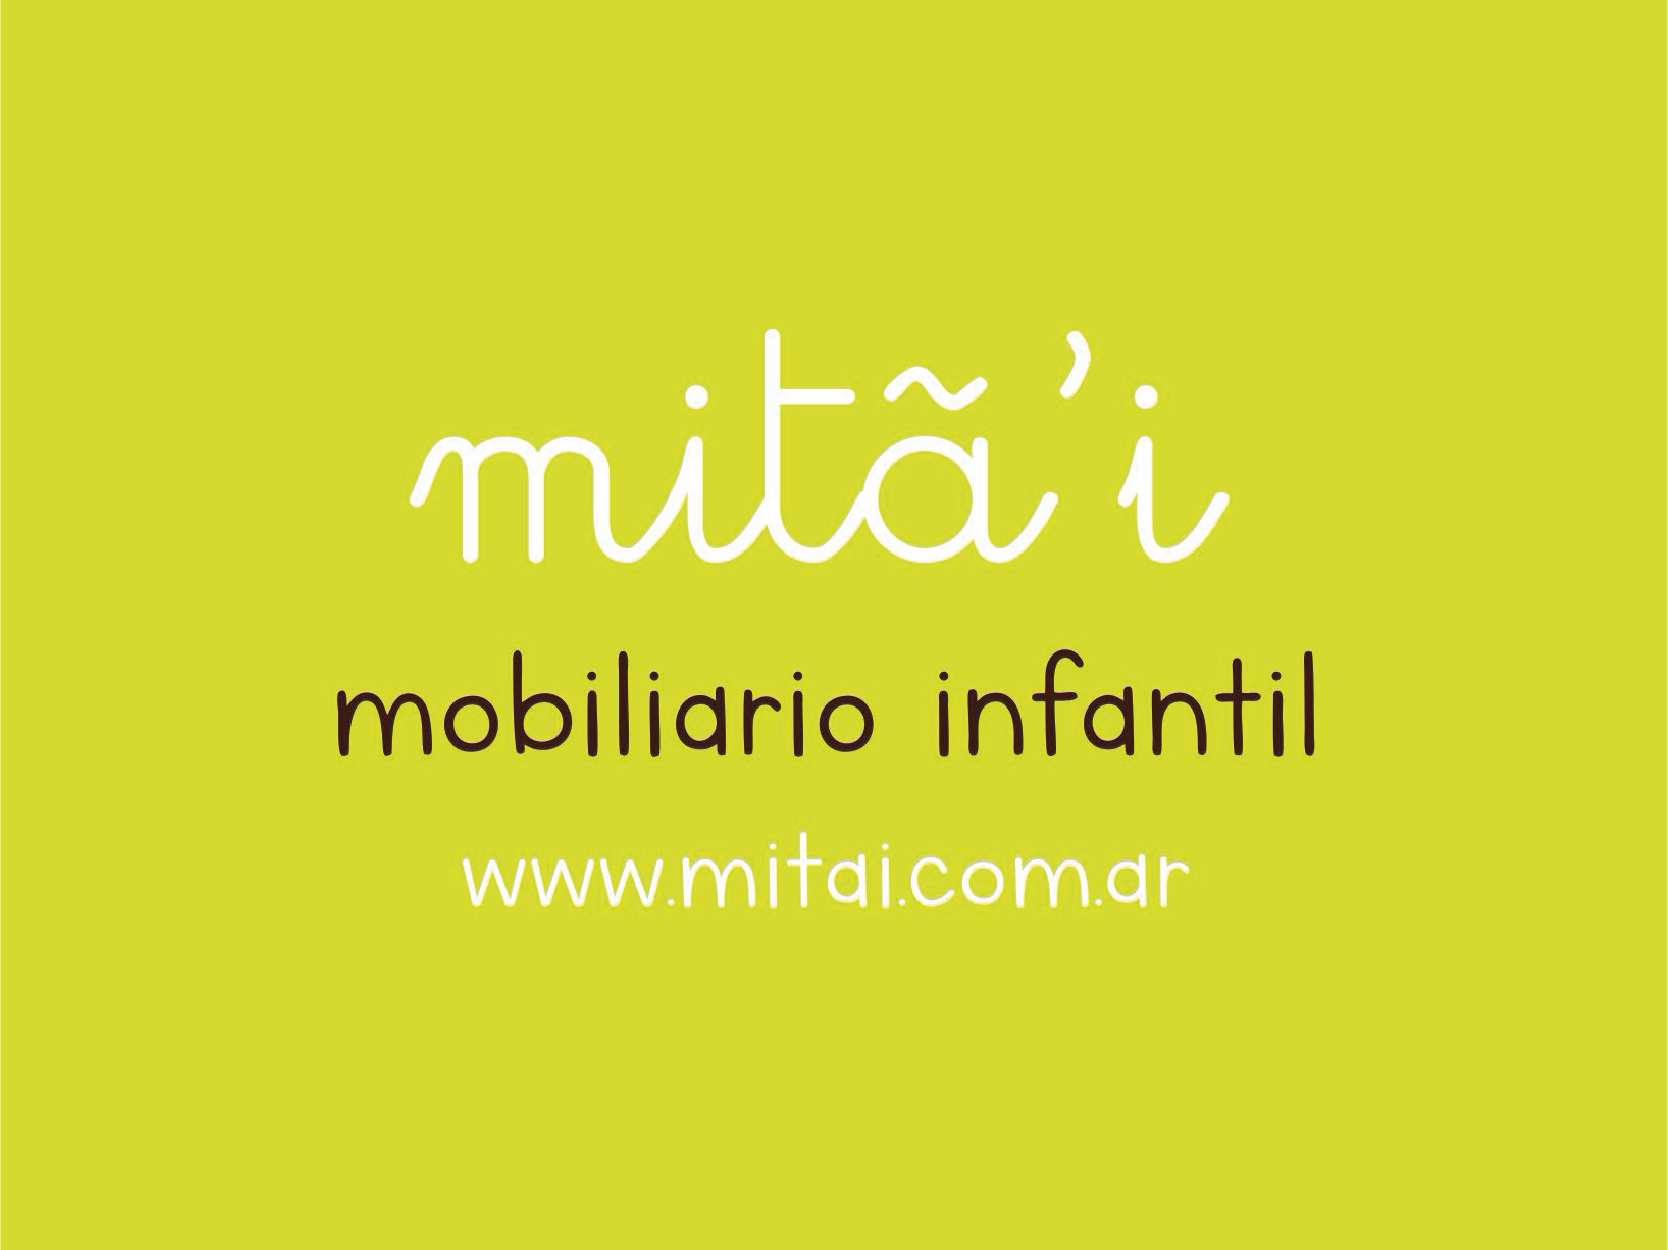 MITAI MOBILIARIO INFANTIL